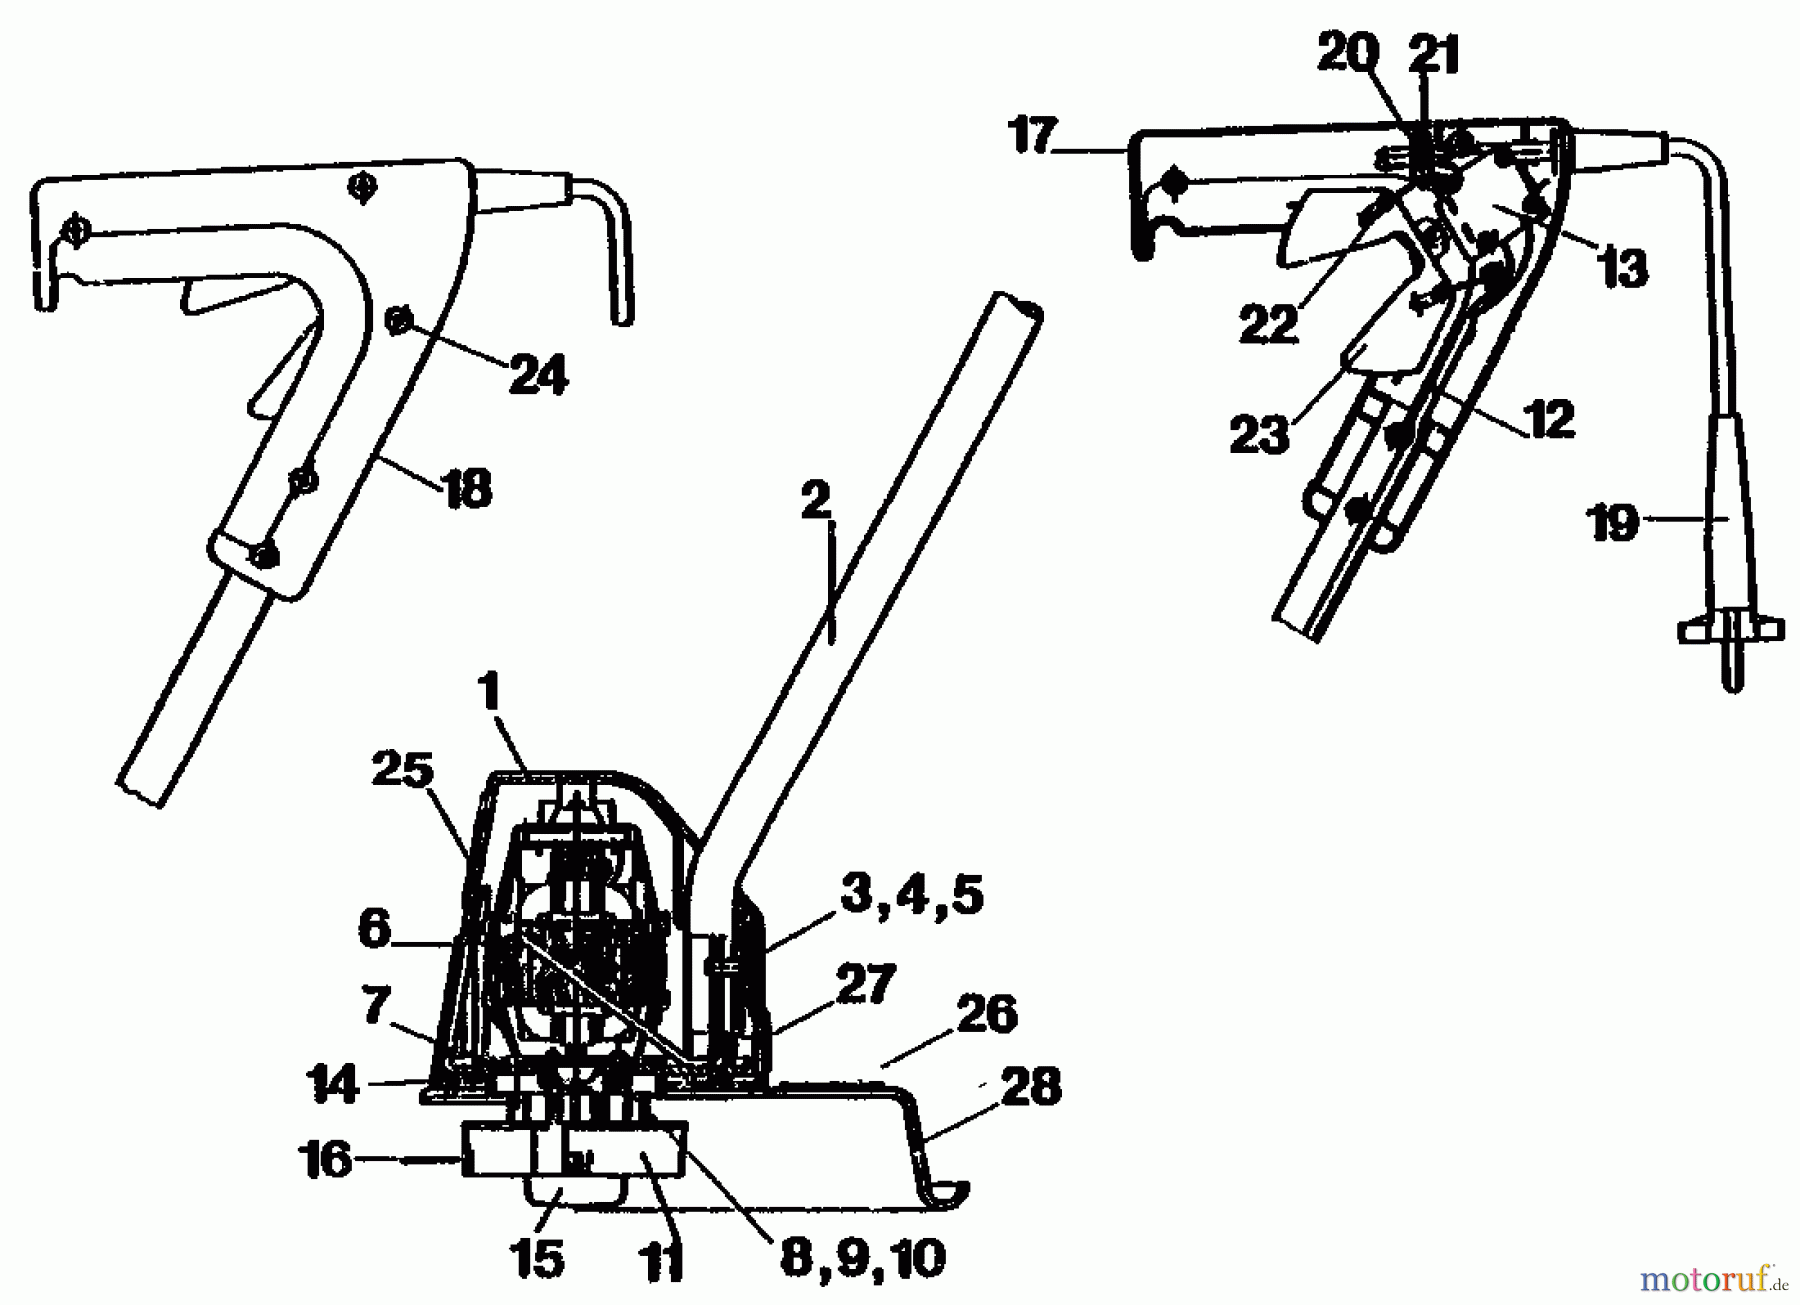  Gutbrod Electric trimmer FE 24-20 02858.07  (1991) Basic machine